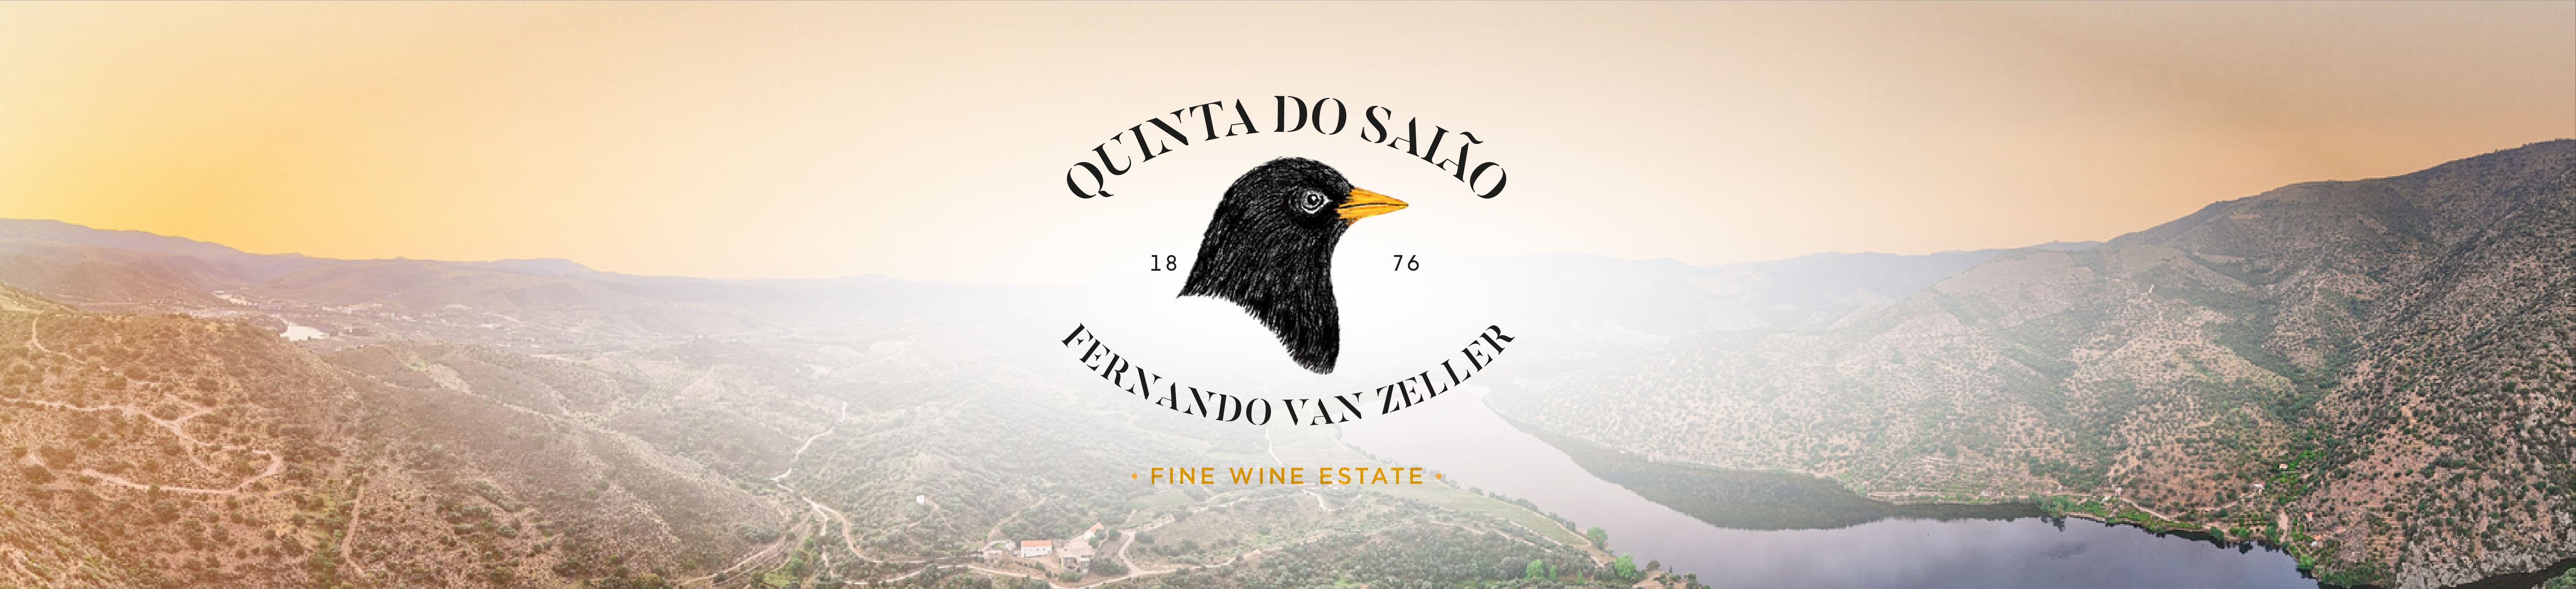 Omdesign reveals the identity and labeling of Quinta do Saião